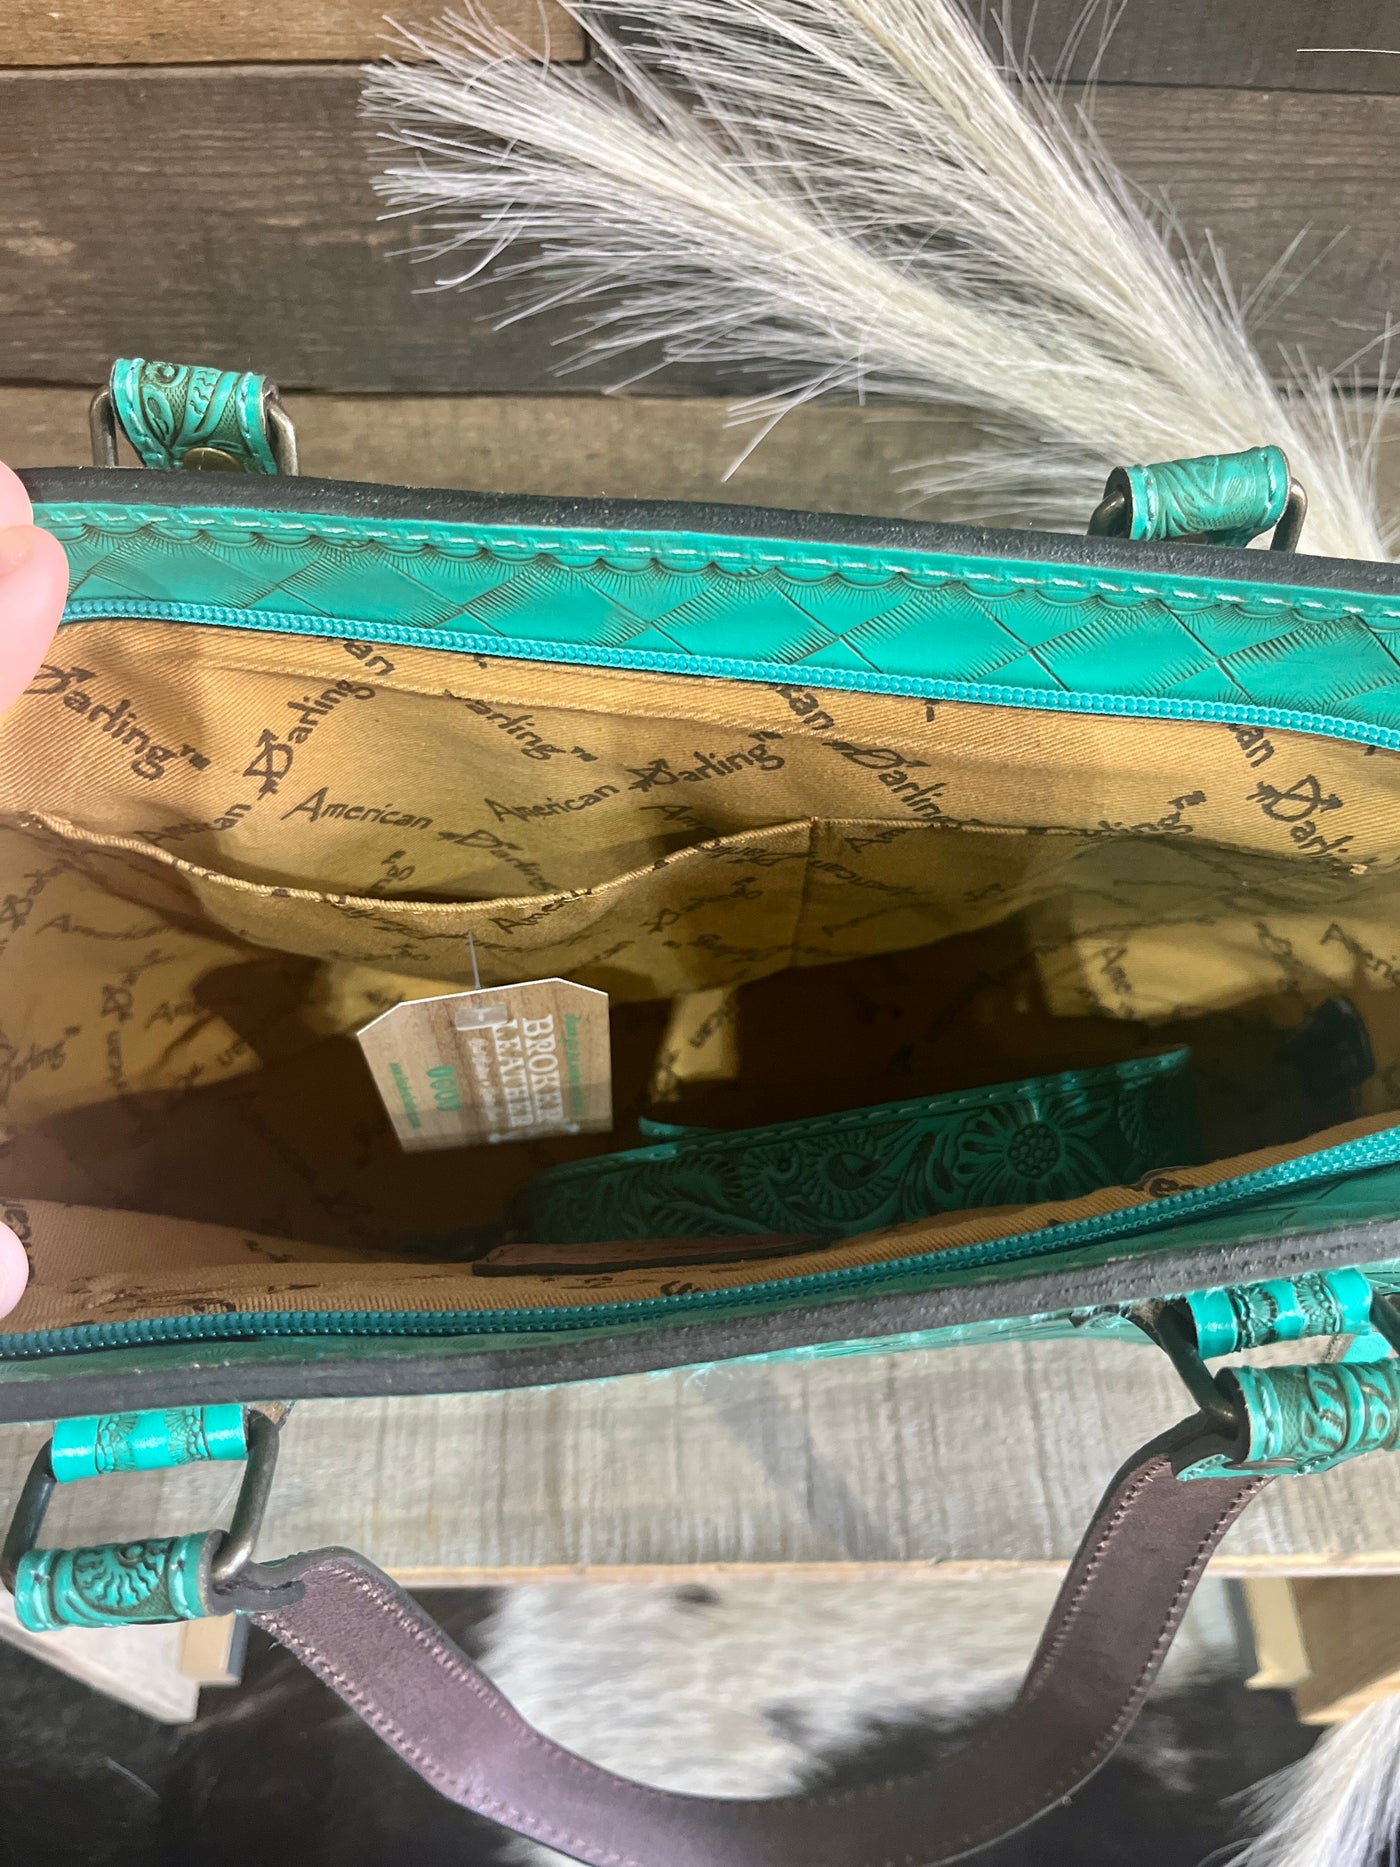 Mariella Turquoise Tooled Leather Tote Bag